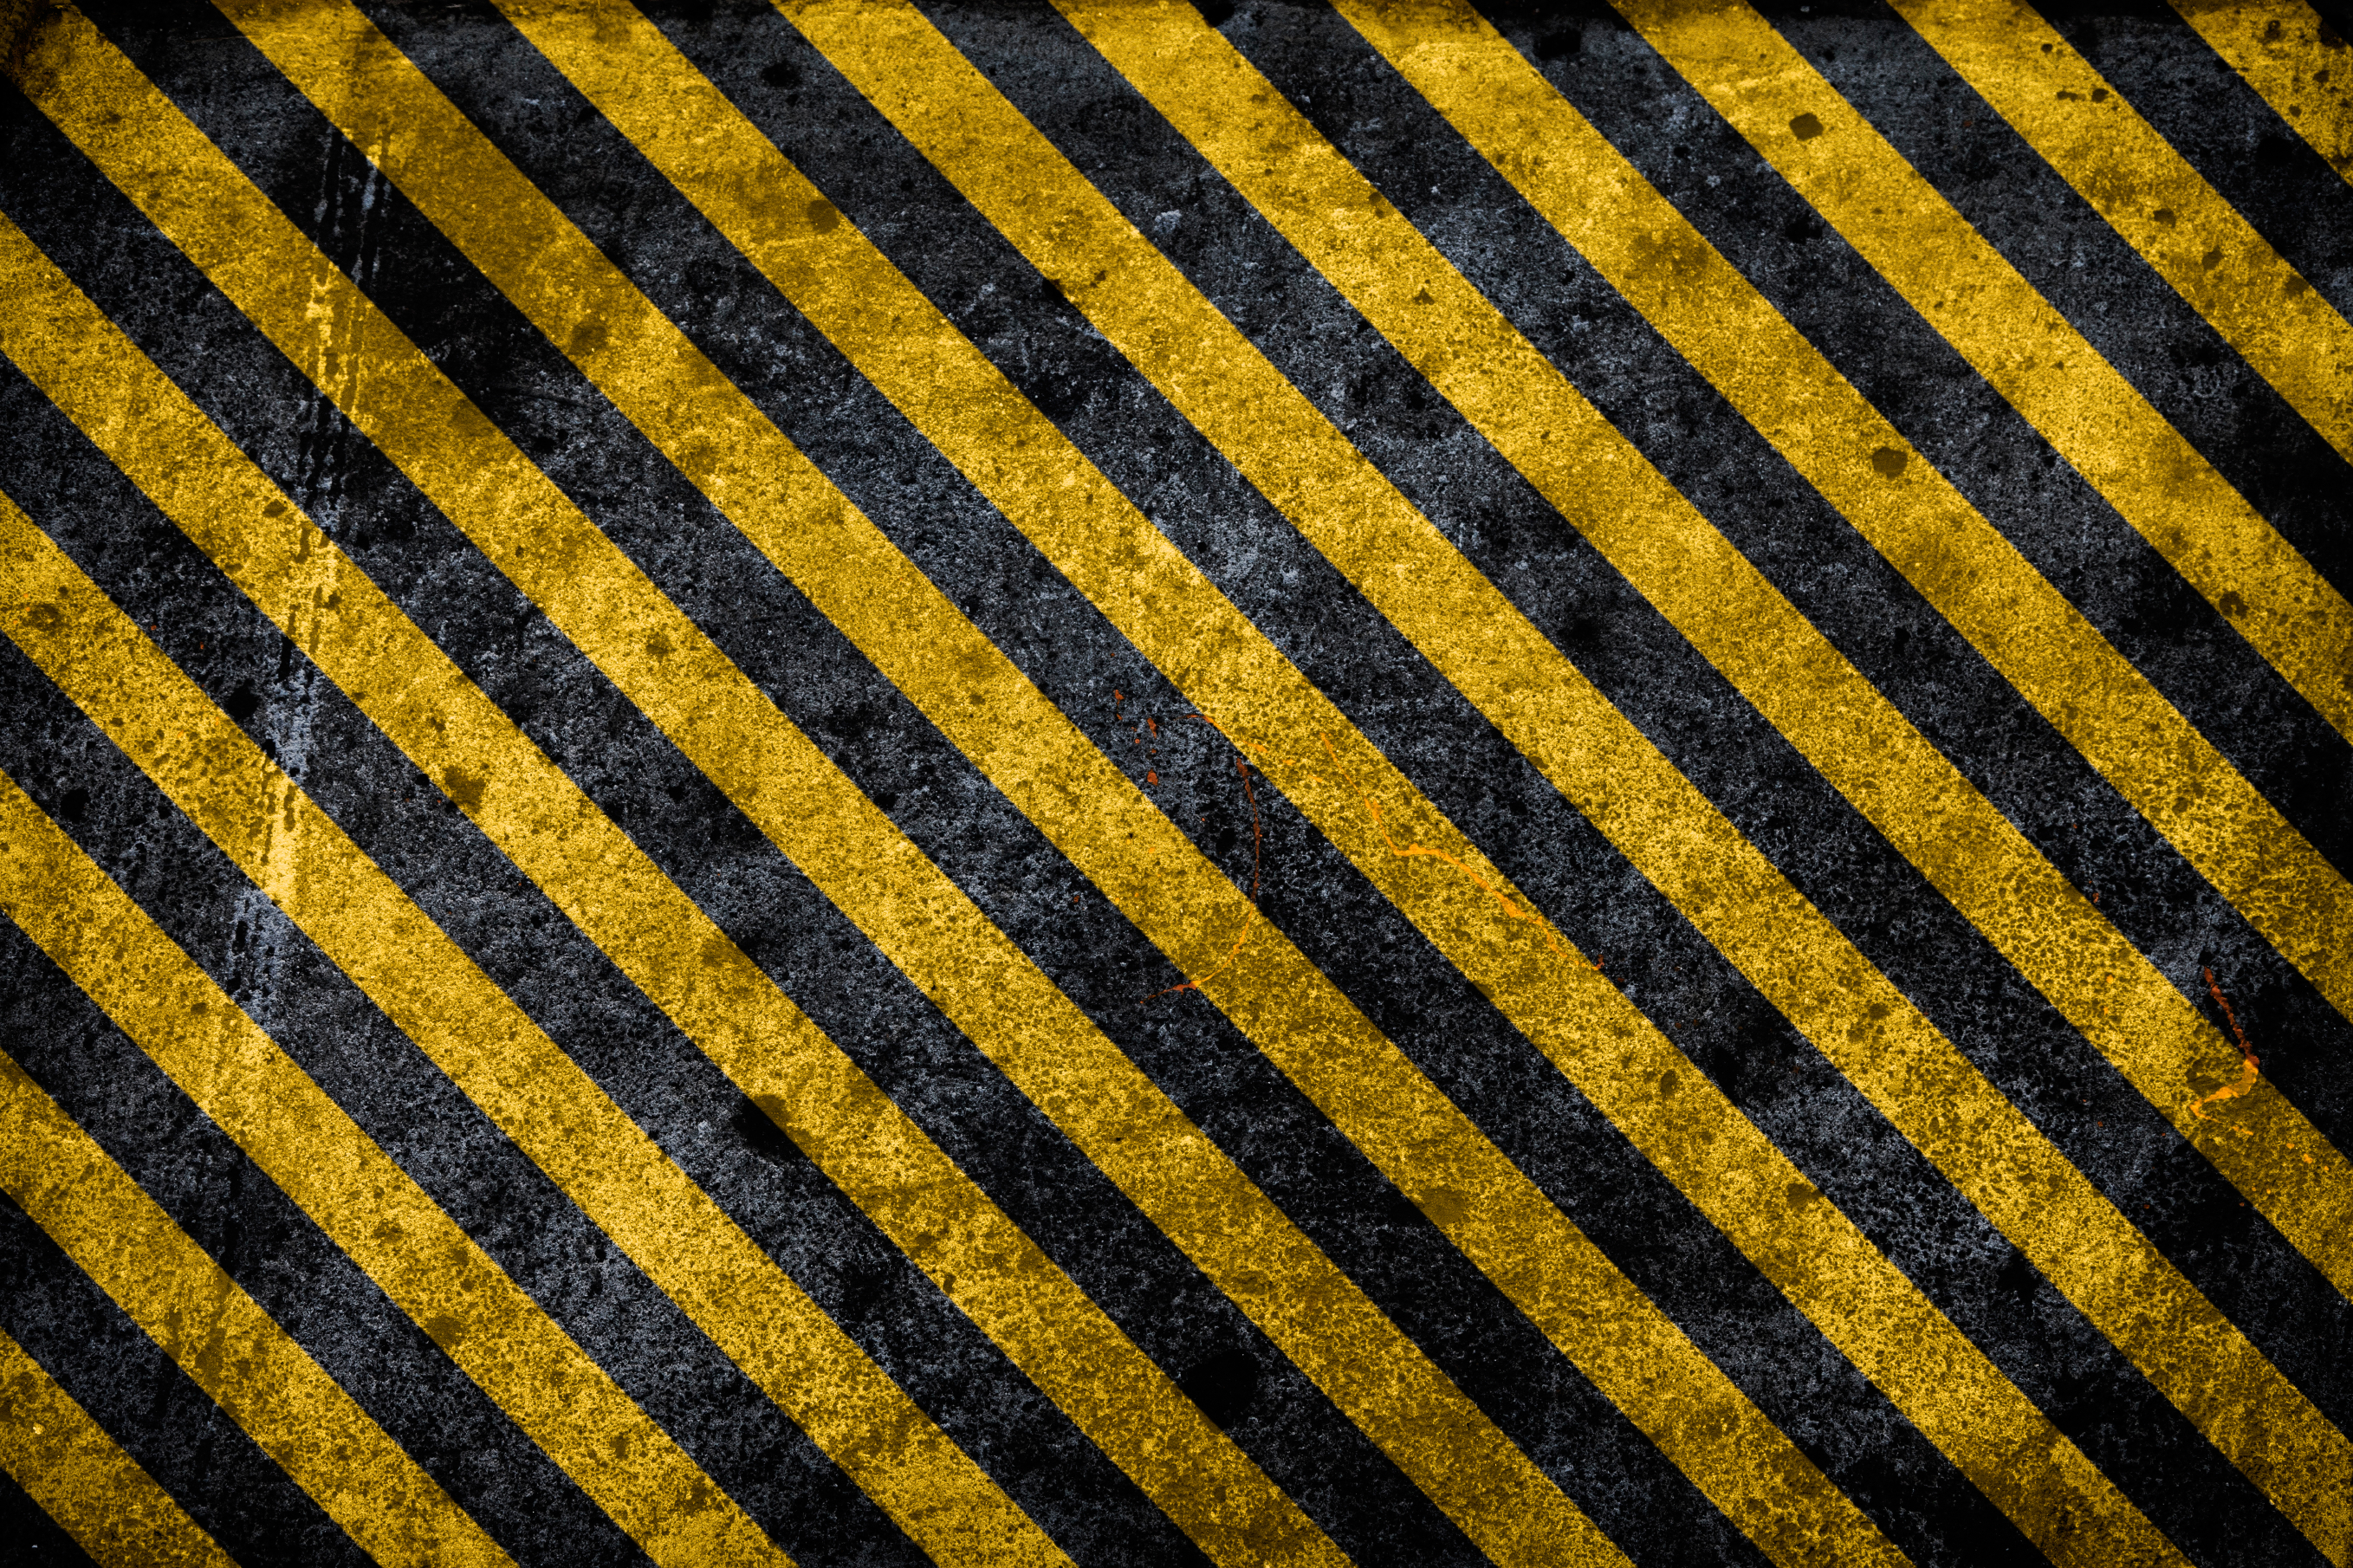  yellow  black  hazard background iStock 000017591515Large 